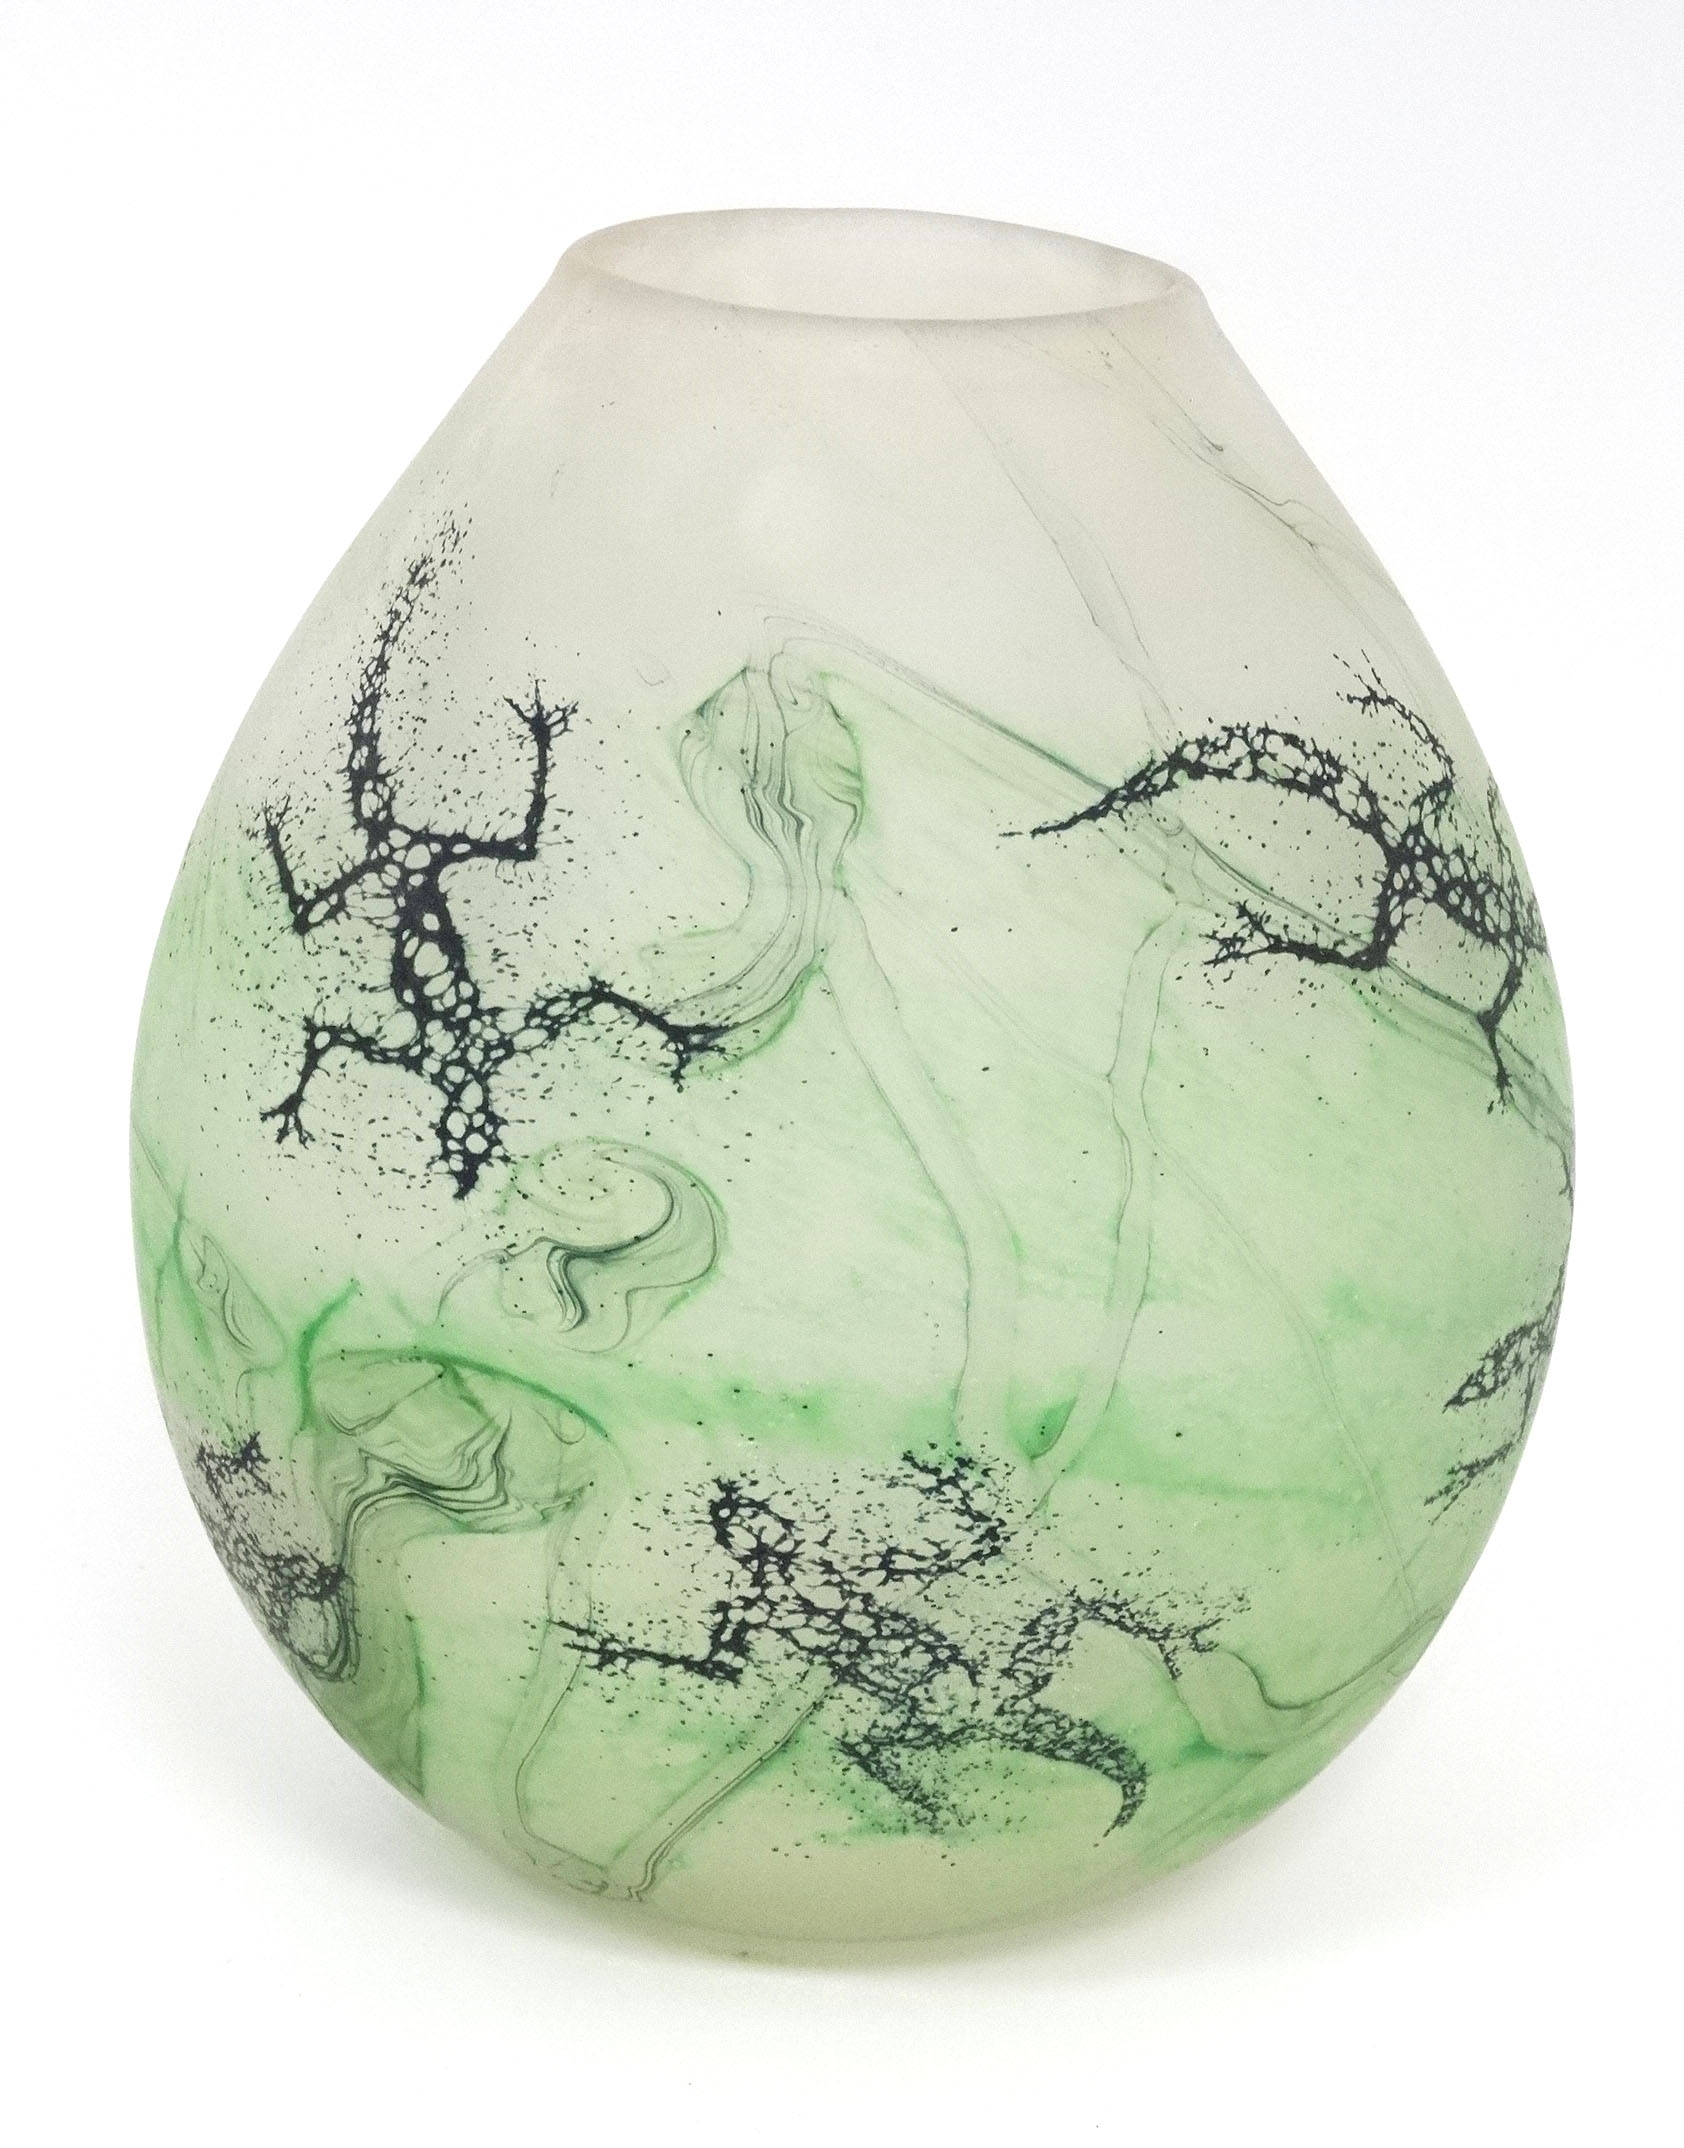 Siddy Langley Studio Glass Vase Sold For £120